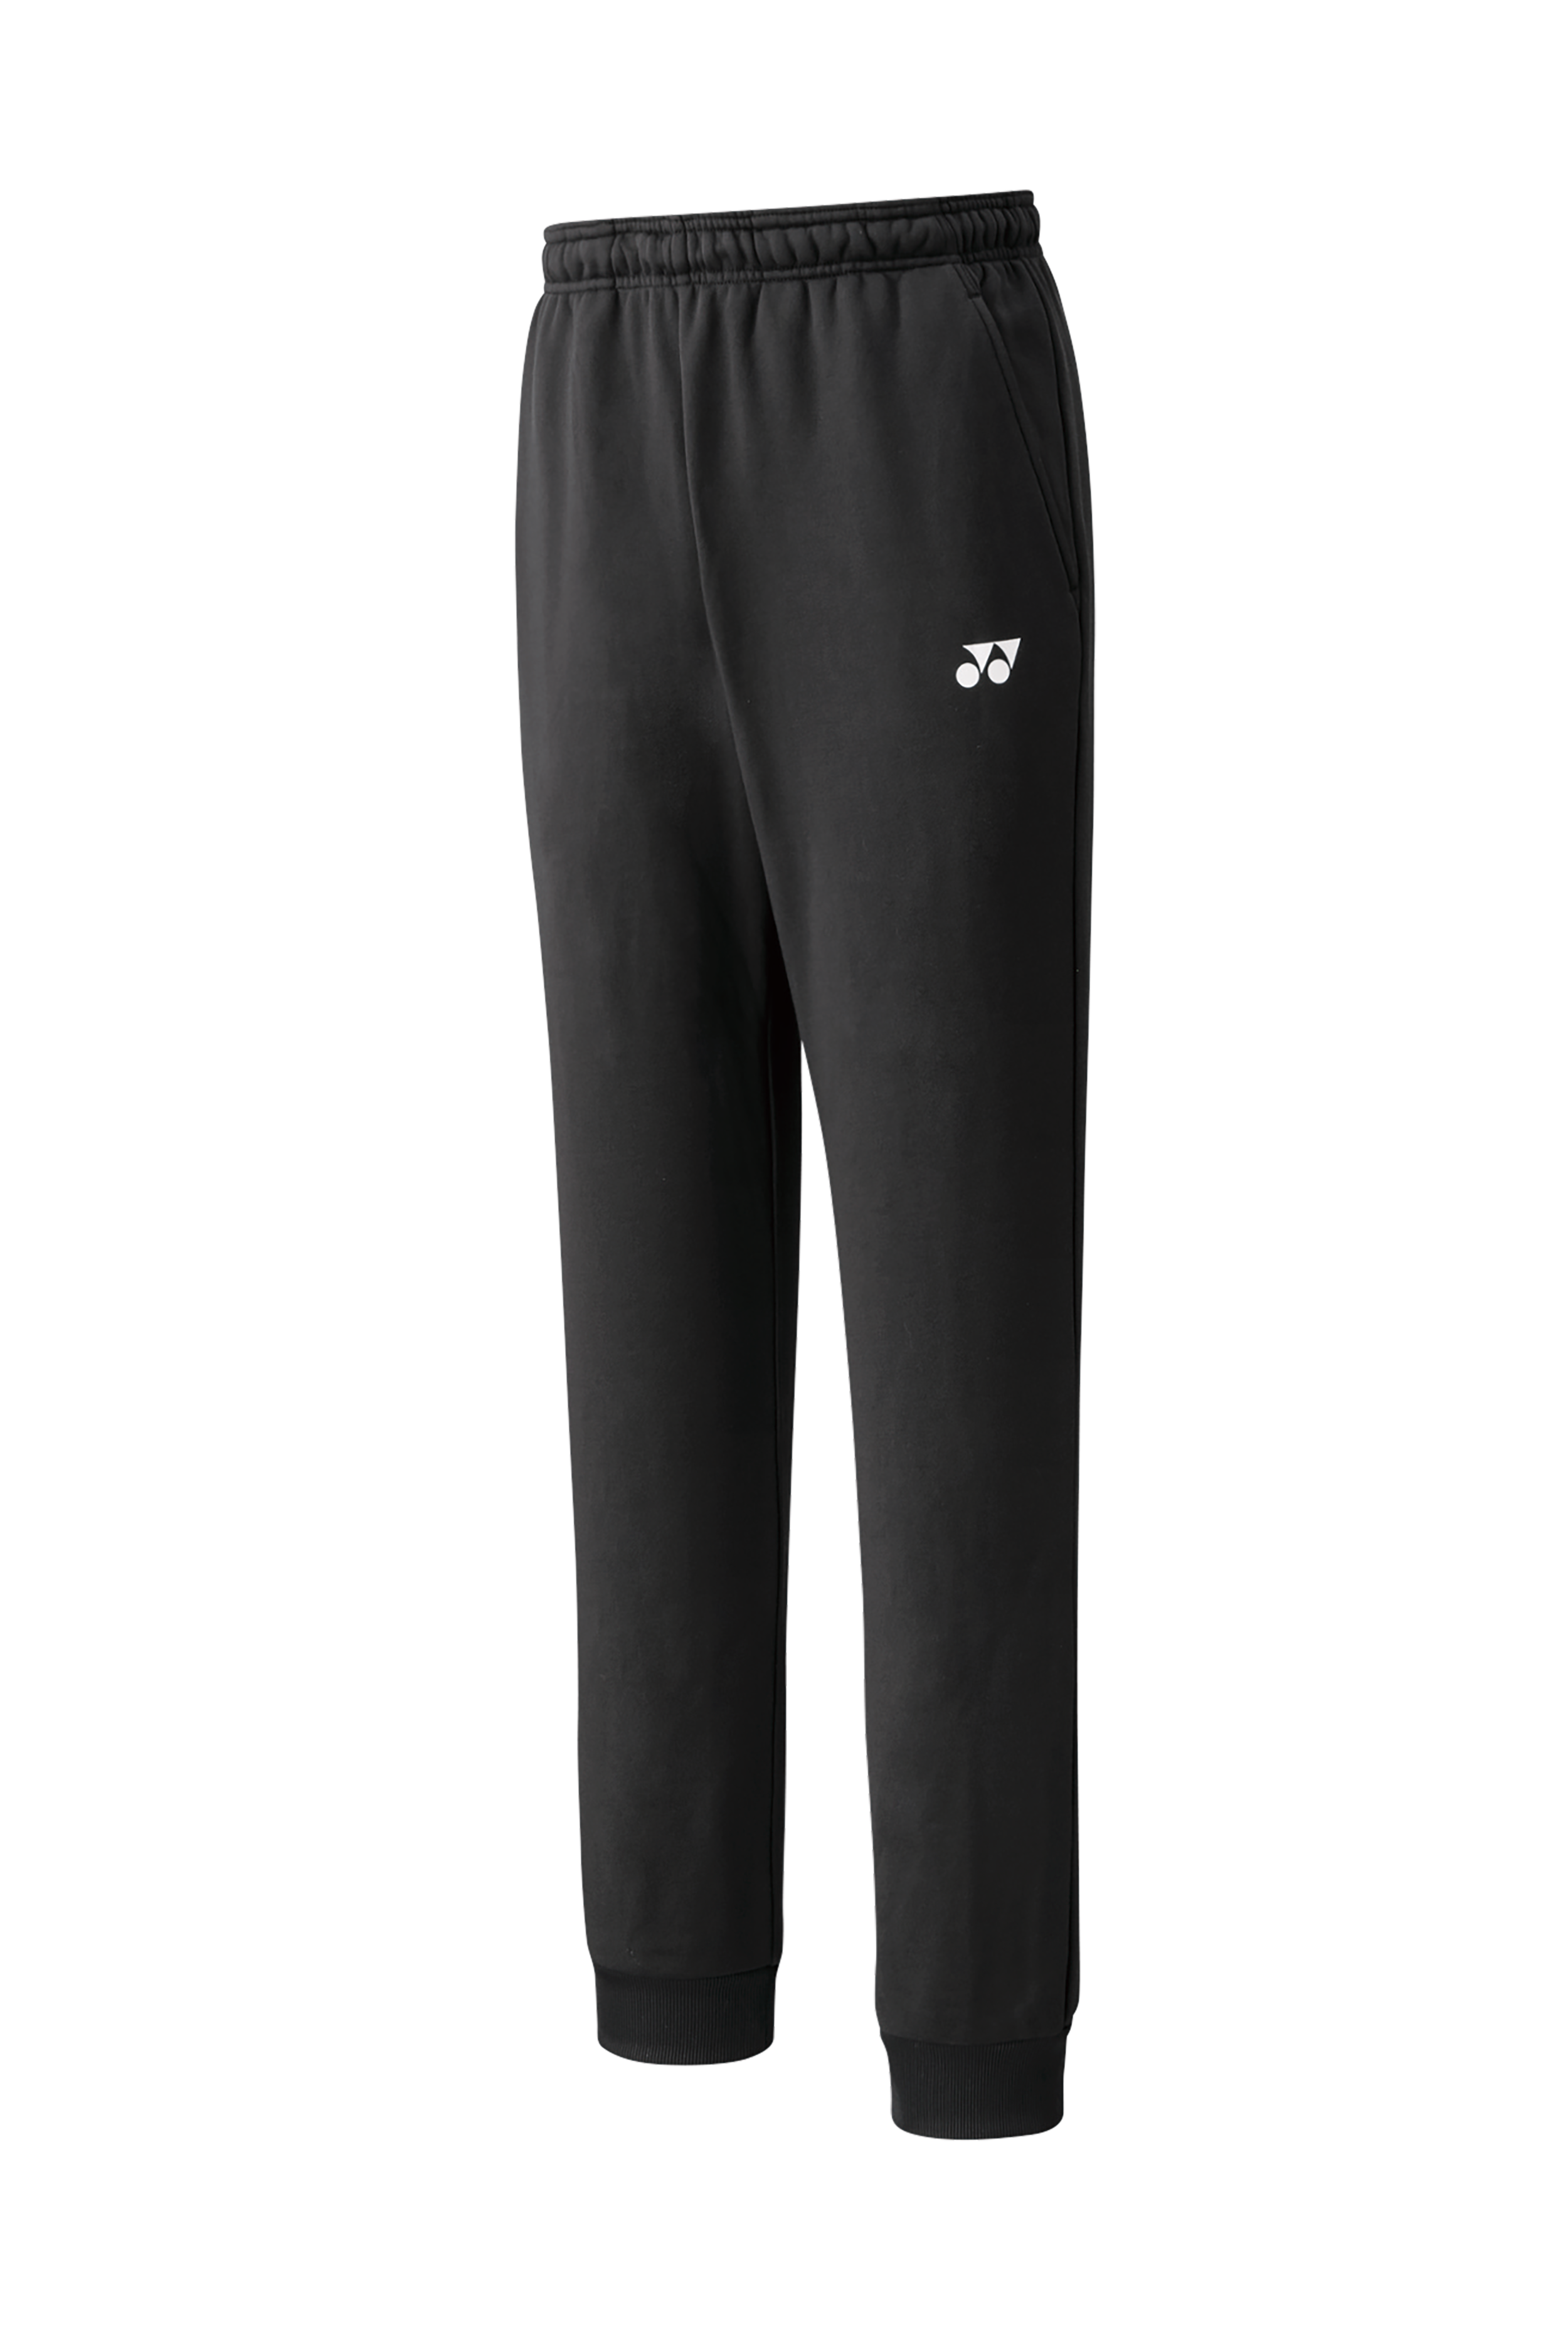 brand tennis sport Jersey Badminton clothing pants quick dry trousers  sports pants running 160033 bottom men women - AliExpress